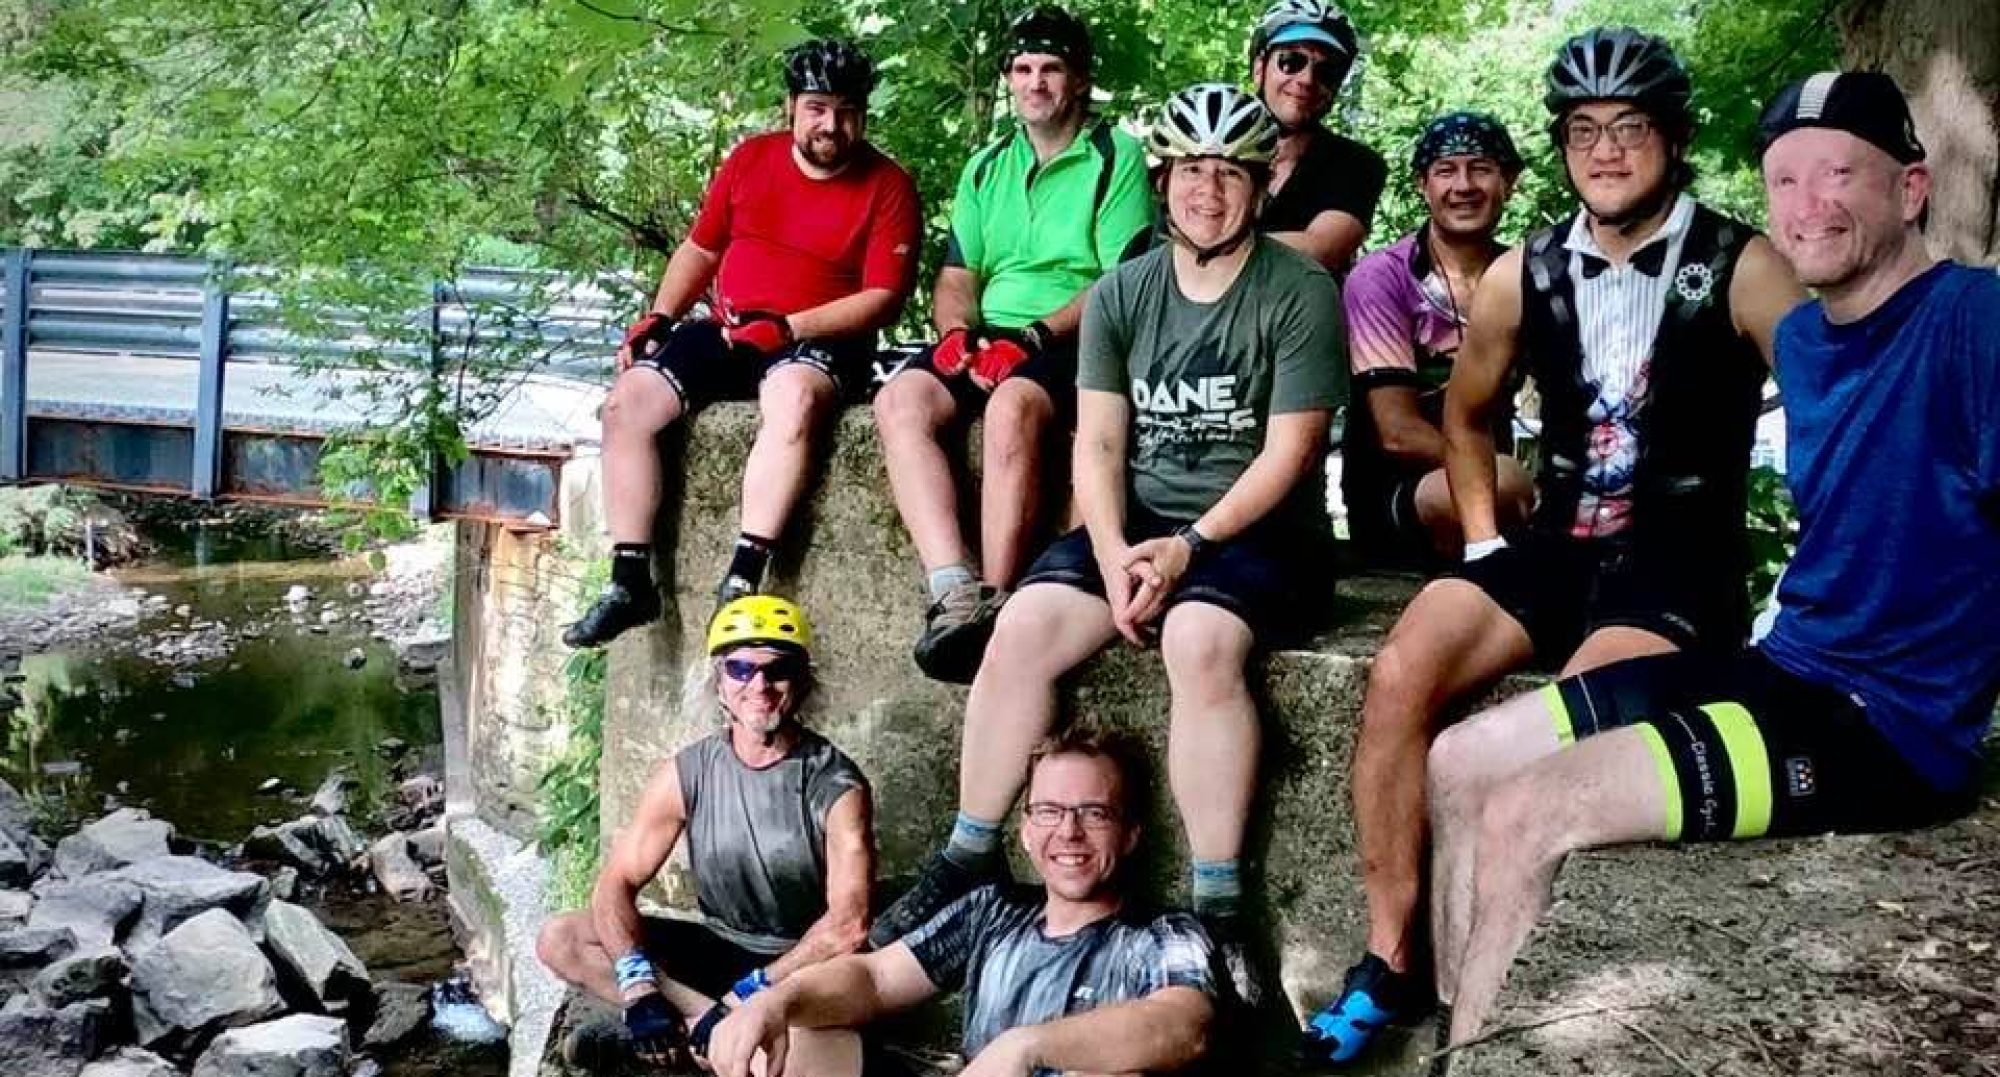 FULL MOON ADVENTURE WEREWOLF BIKE RIDE – Night Riding, Gravel Gliding and Bike Camping New Jersey since 2010